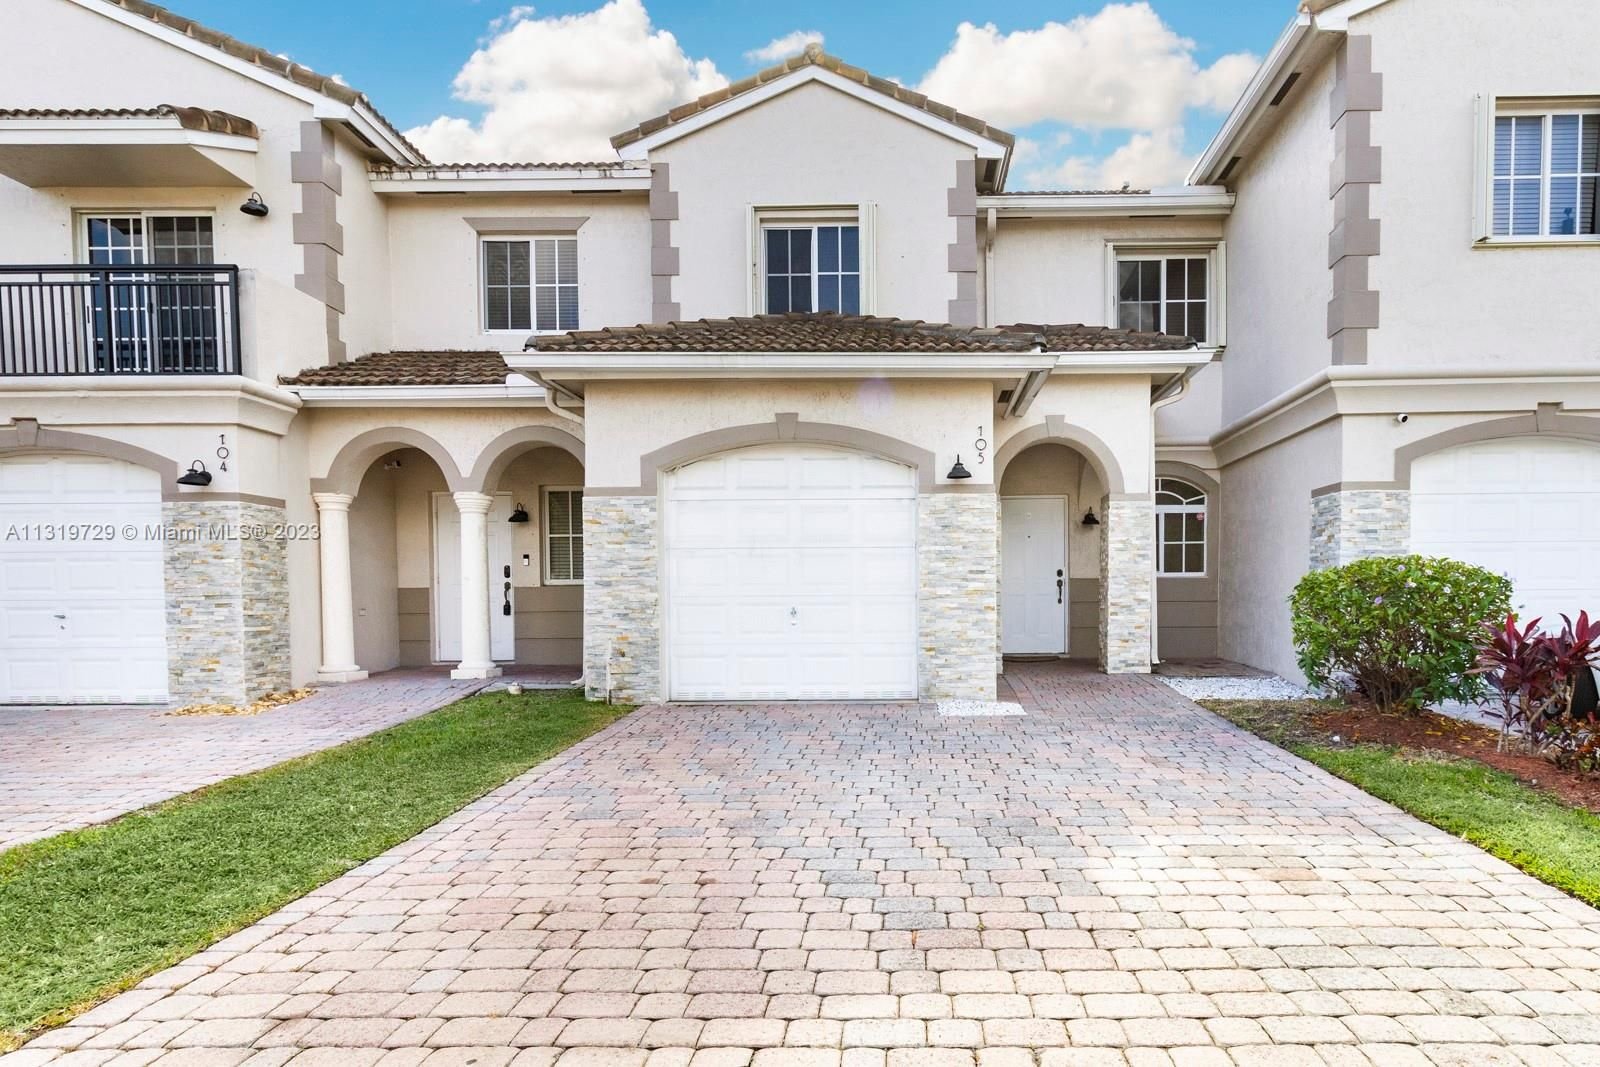 Real estate property located at 8331 124th Ave #105-14, Miami-Dade County, Miami, FL